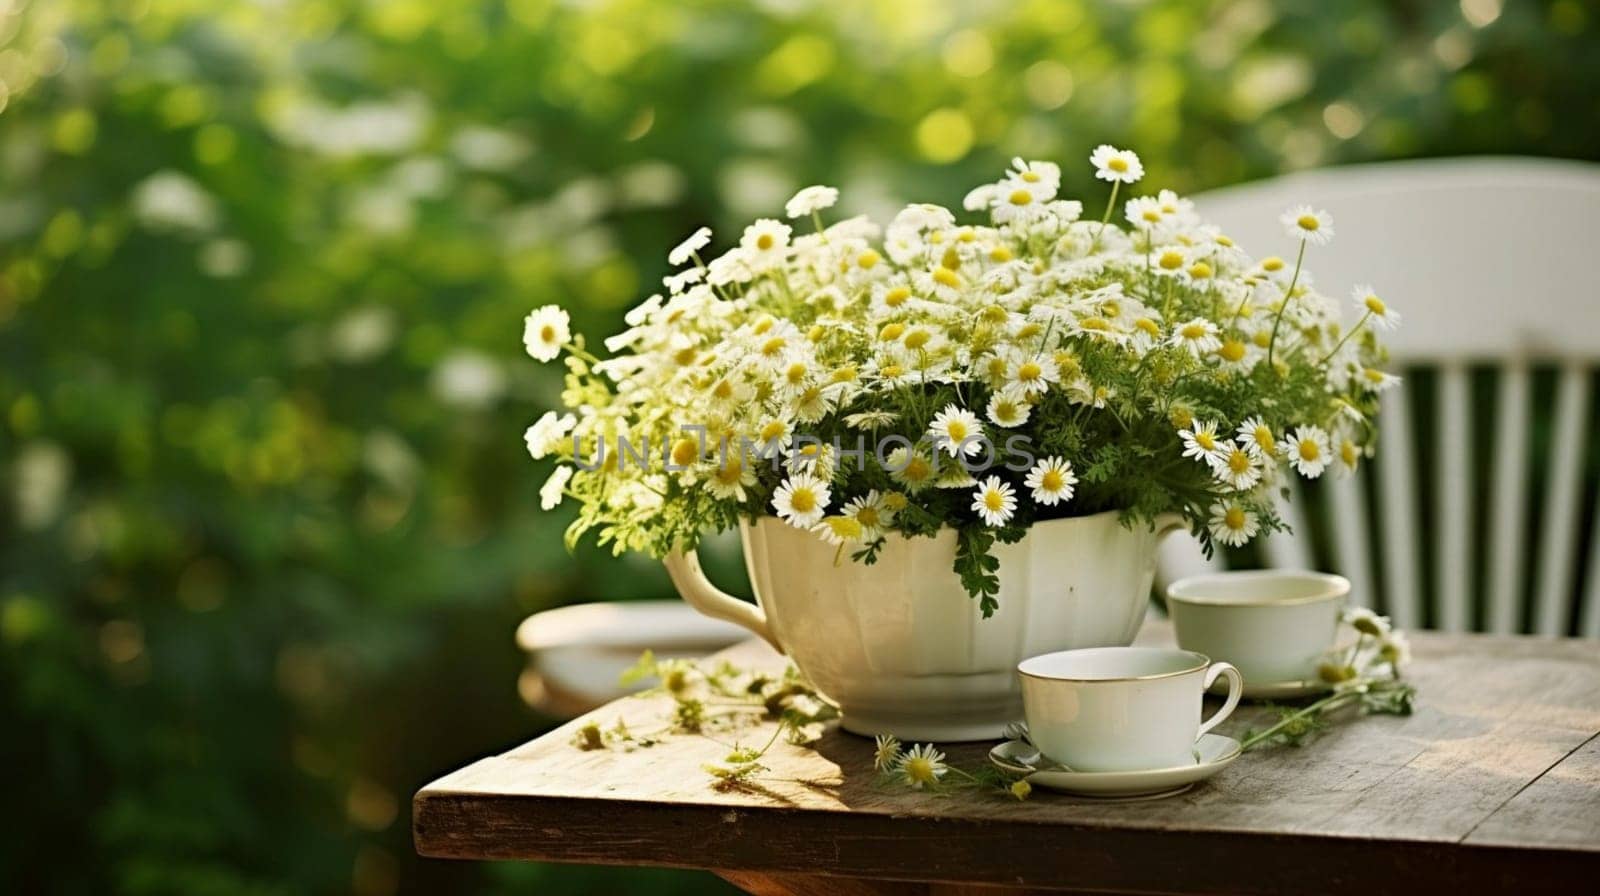 Teapot with white daisies on a wooden table outdoors by kizuneko